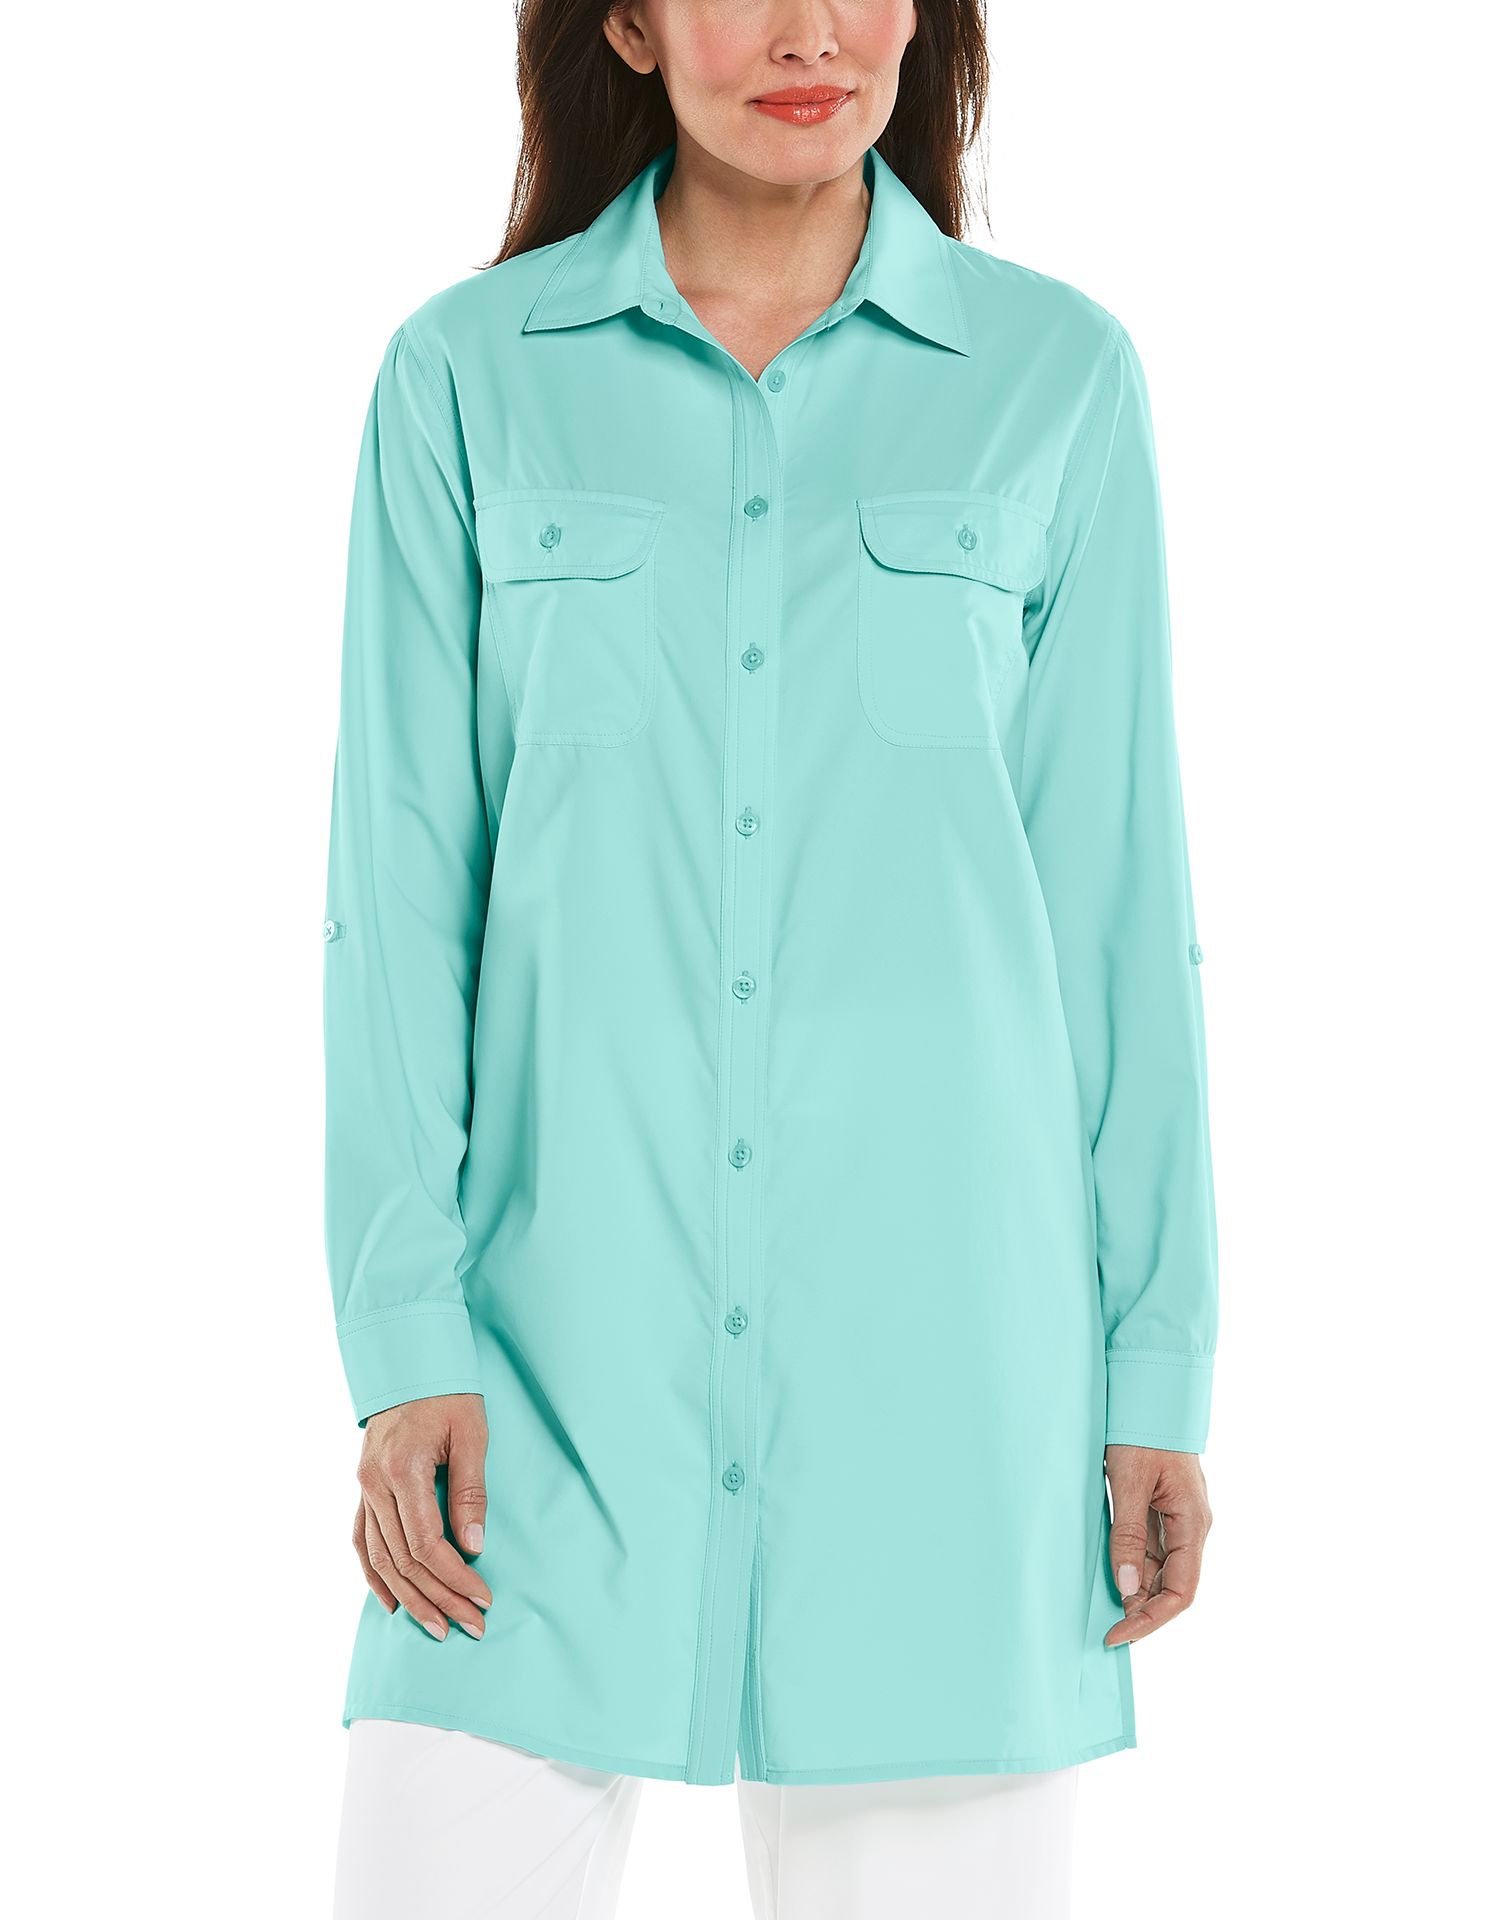 Coolibar - UV Shirt für Damen - Santorini Tunikabluse - Seekristall